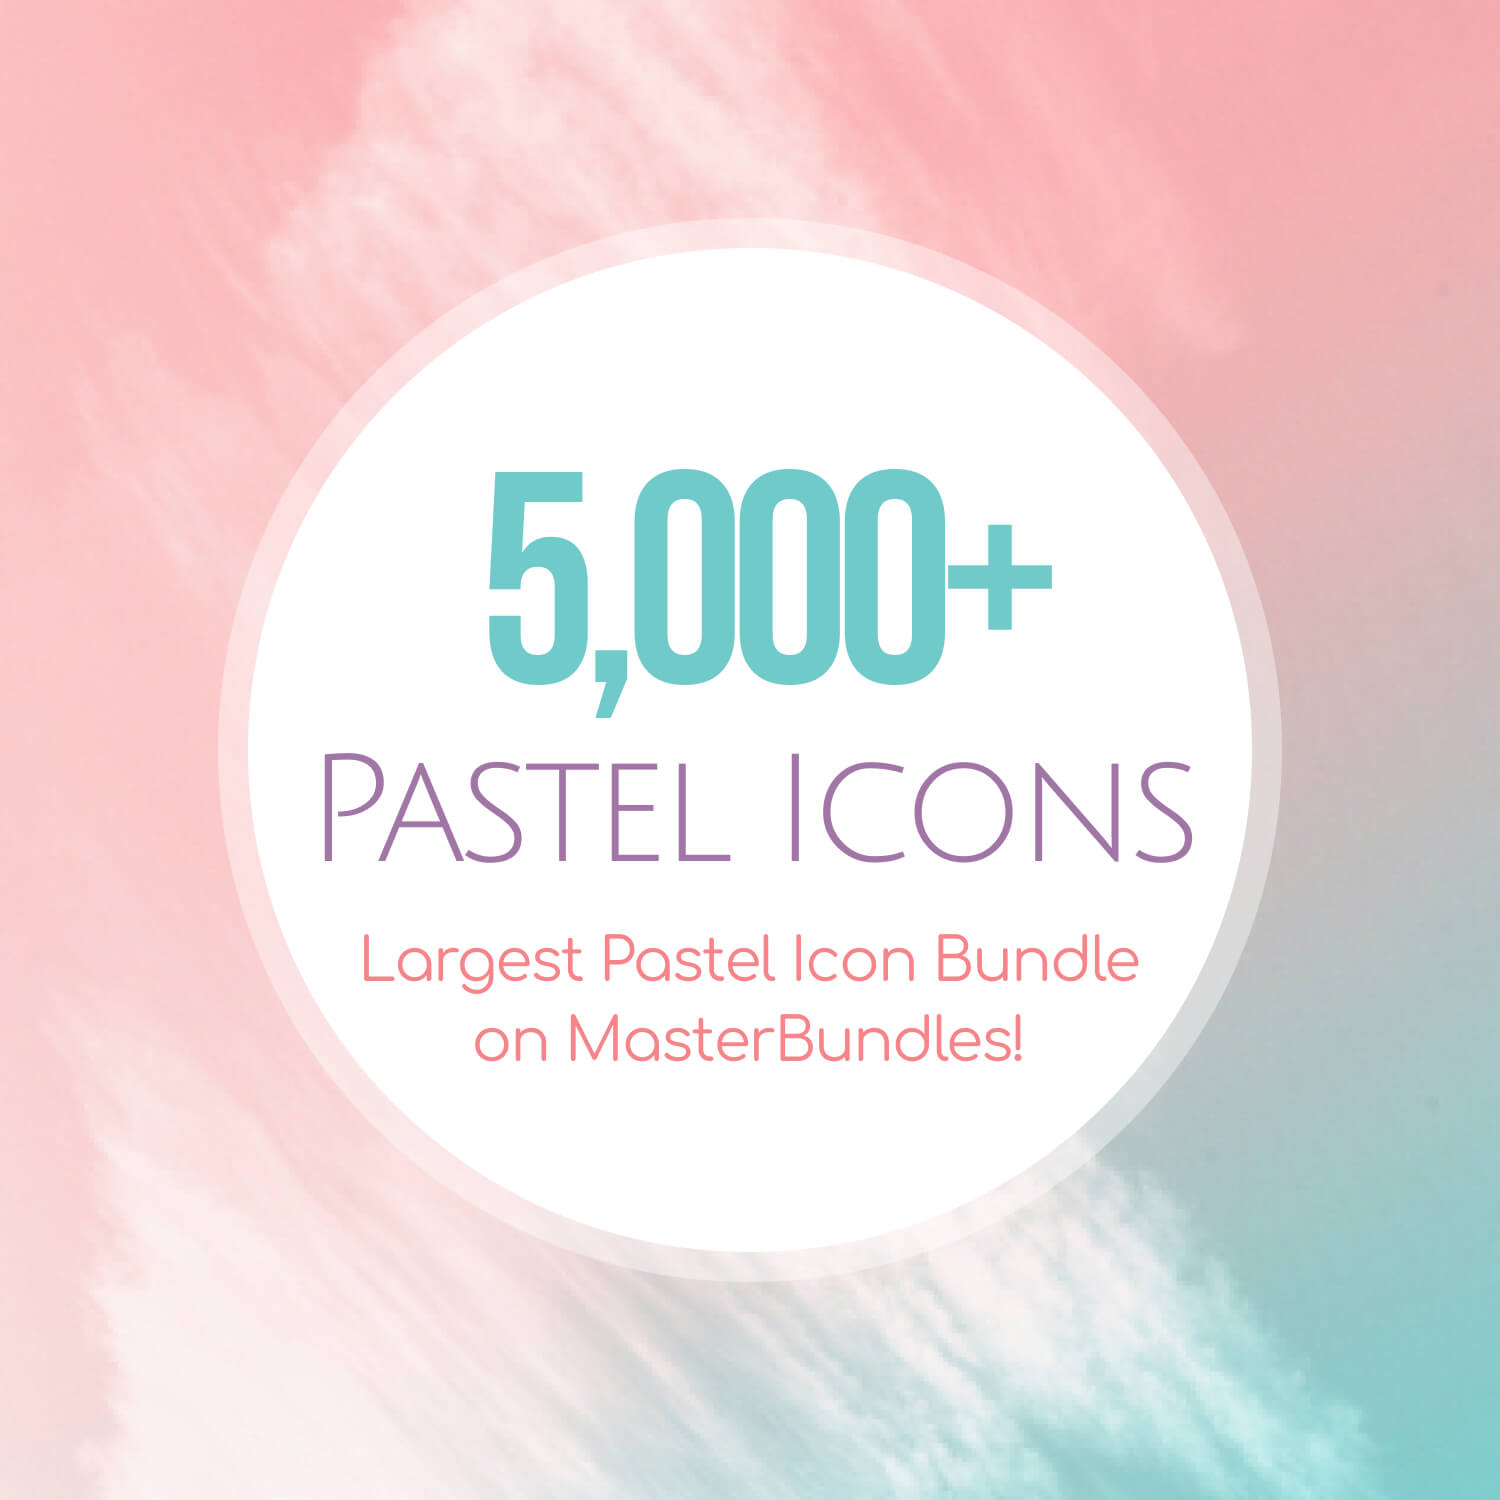 5,000+ Pastel Icons - Largest Pastel Icon Bundle on MasterBundles!